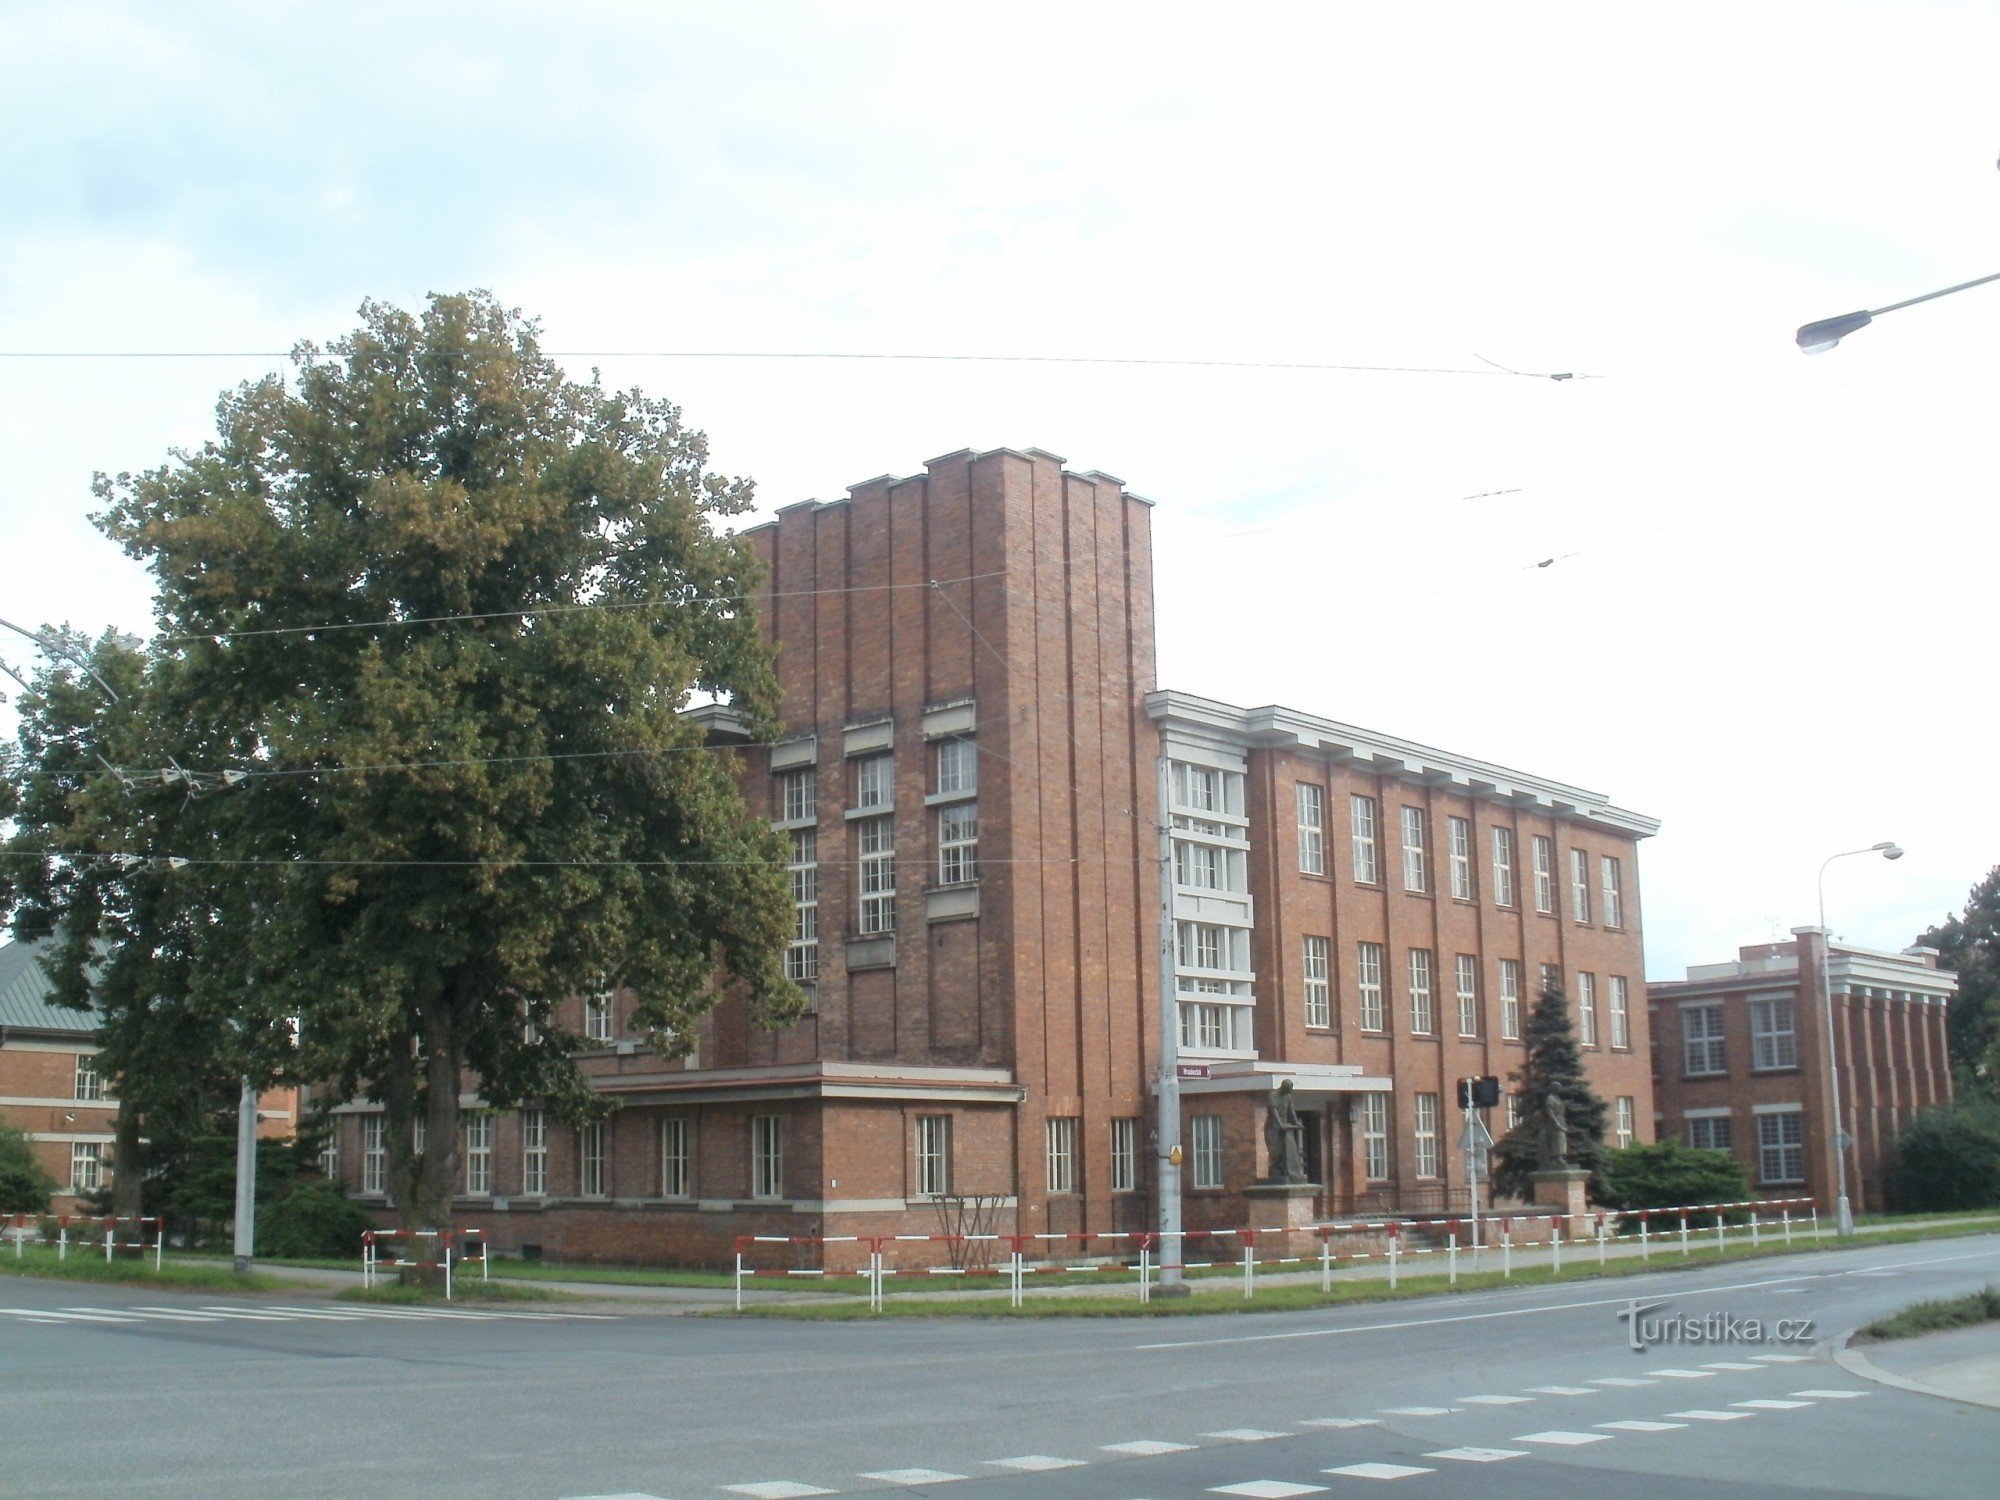 Hradec Králové - la antigua escuela Koželuž de Gočár